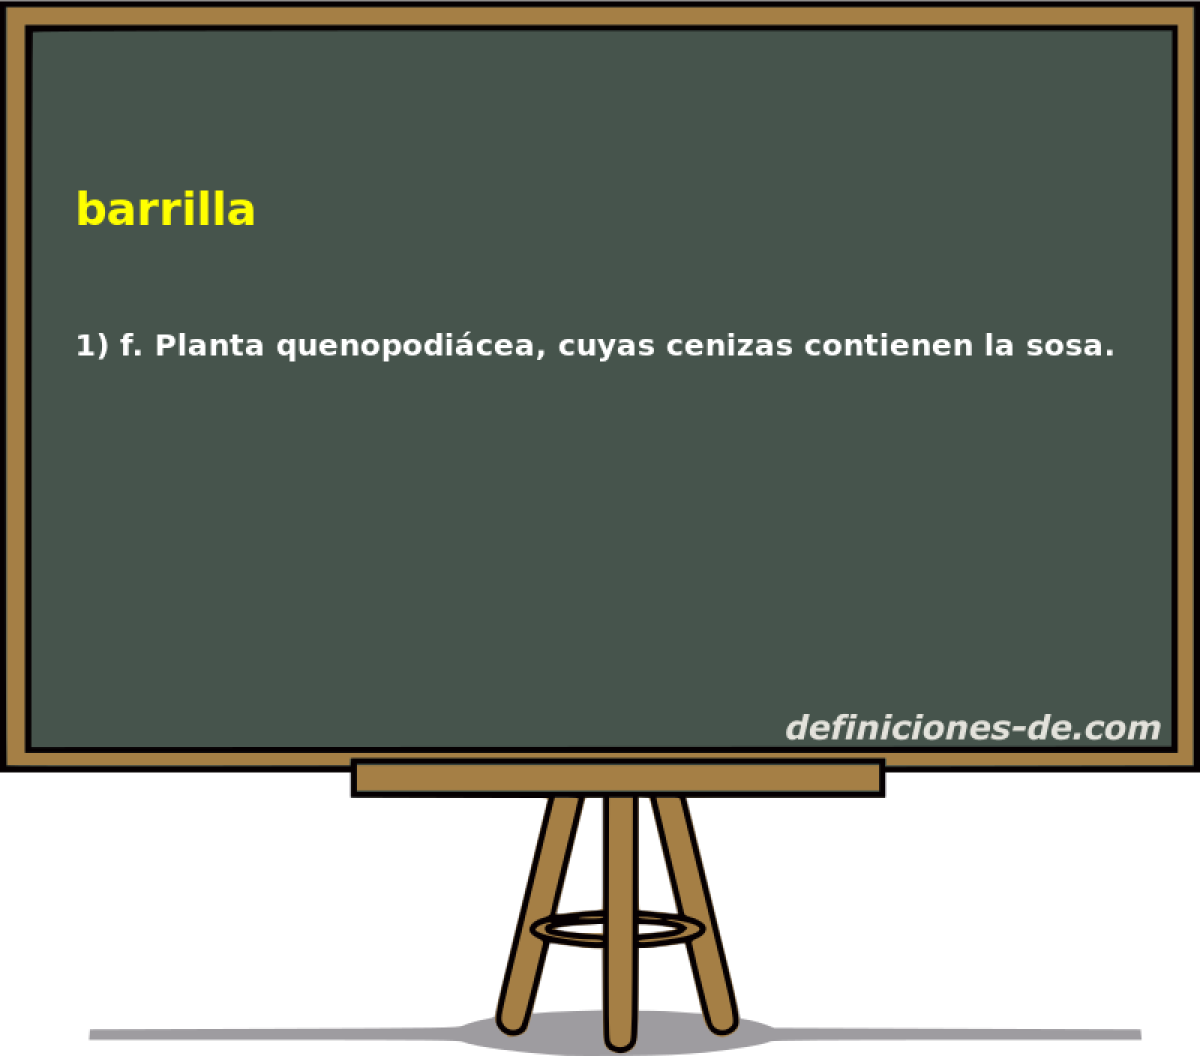 barrilla 